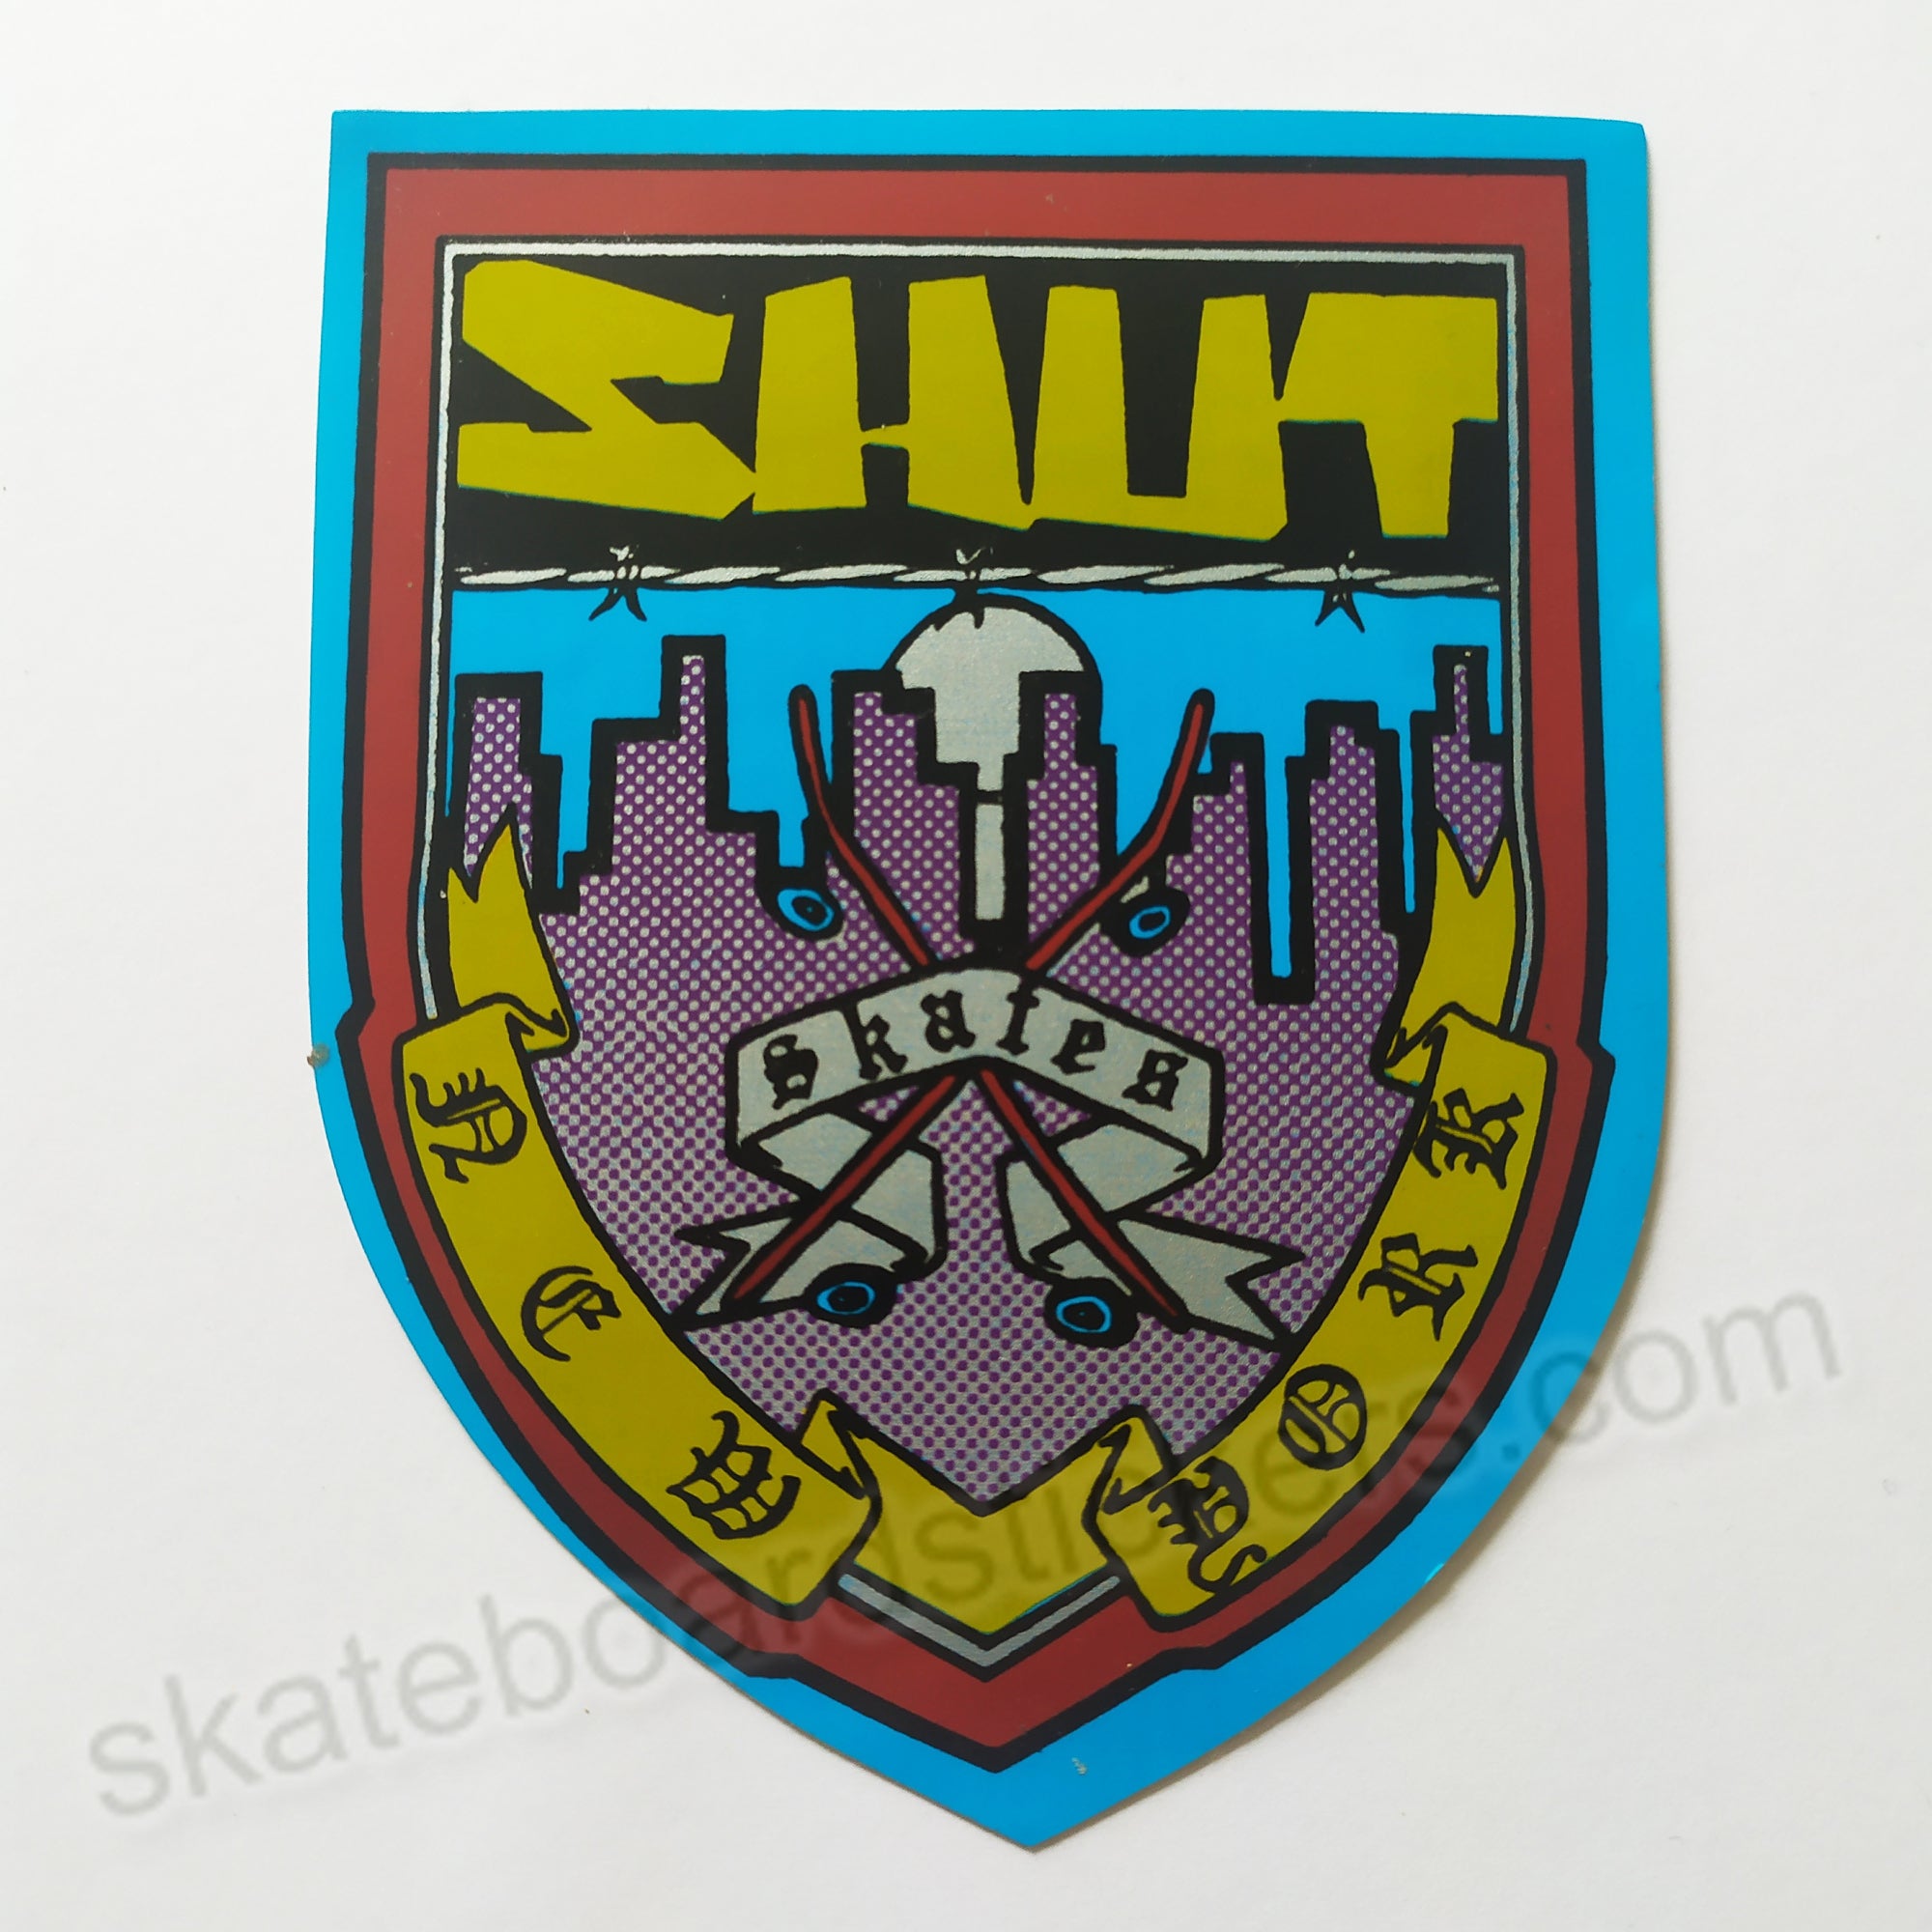 Shut Skates - New York Old School Skateboard Sticker - SkateboardStickers.com